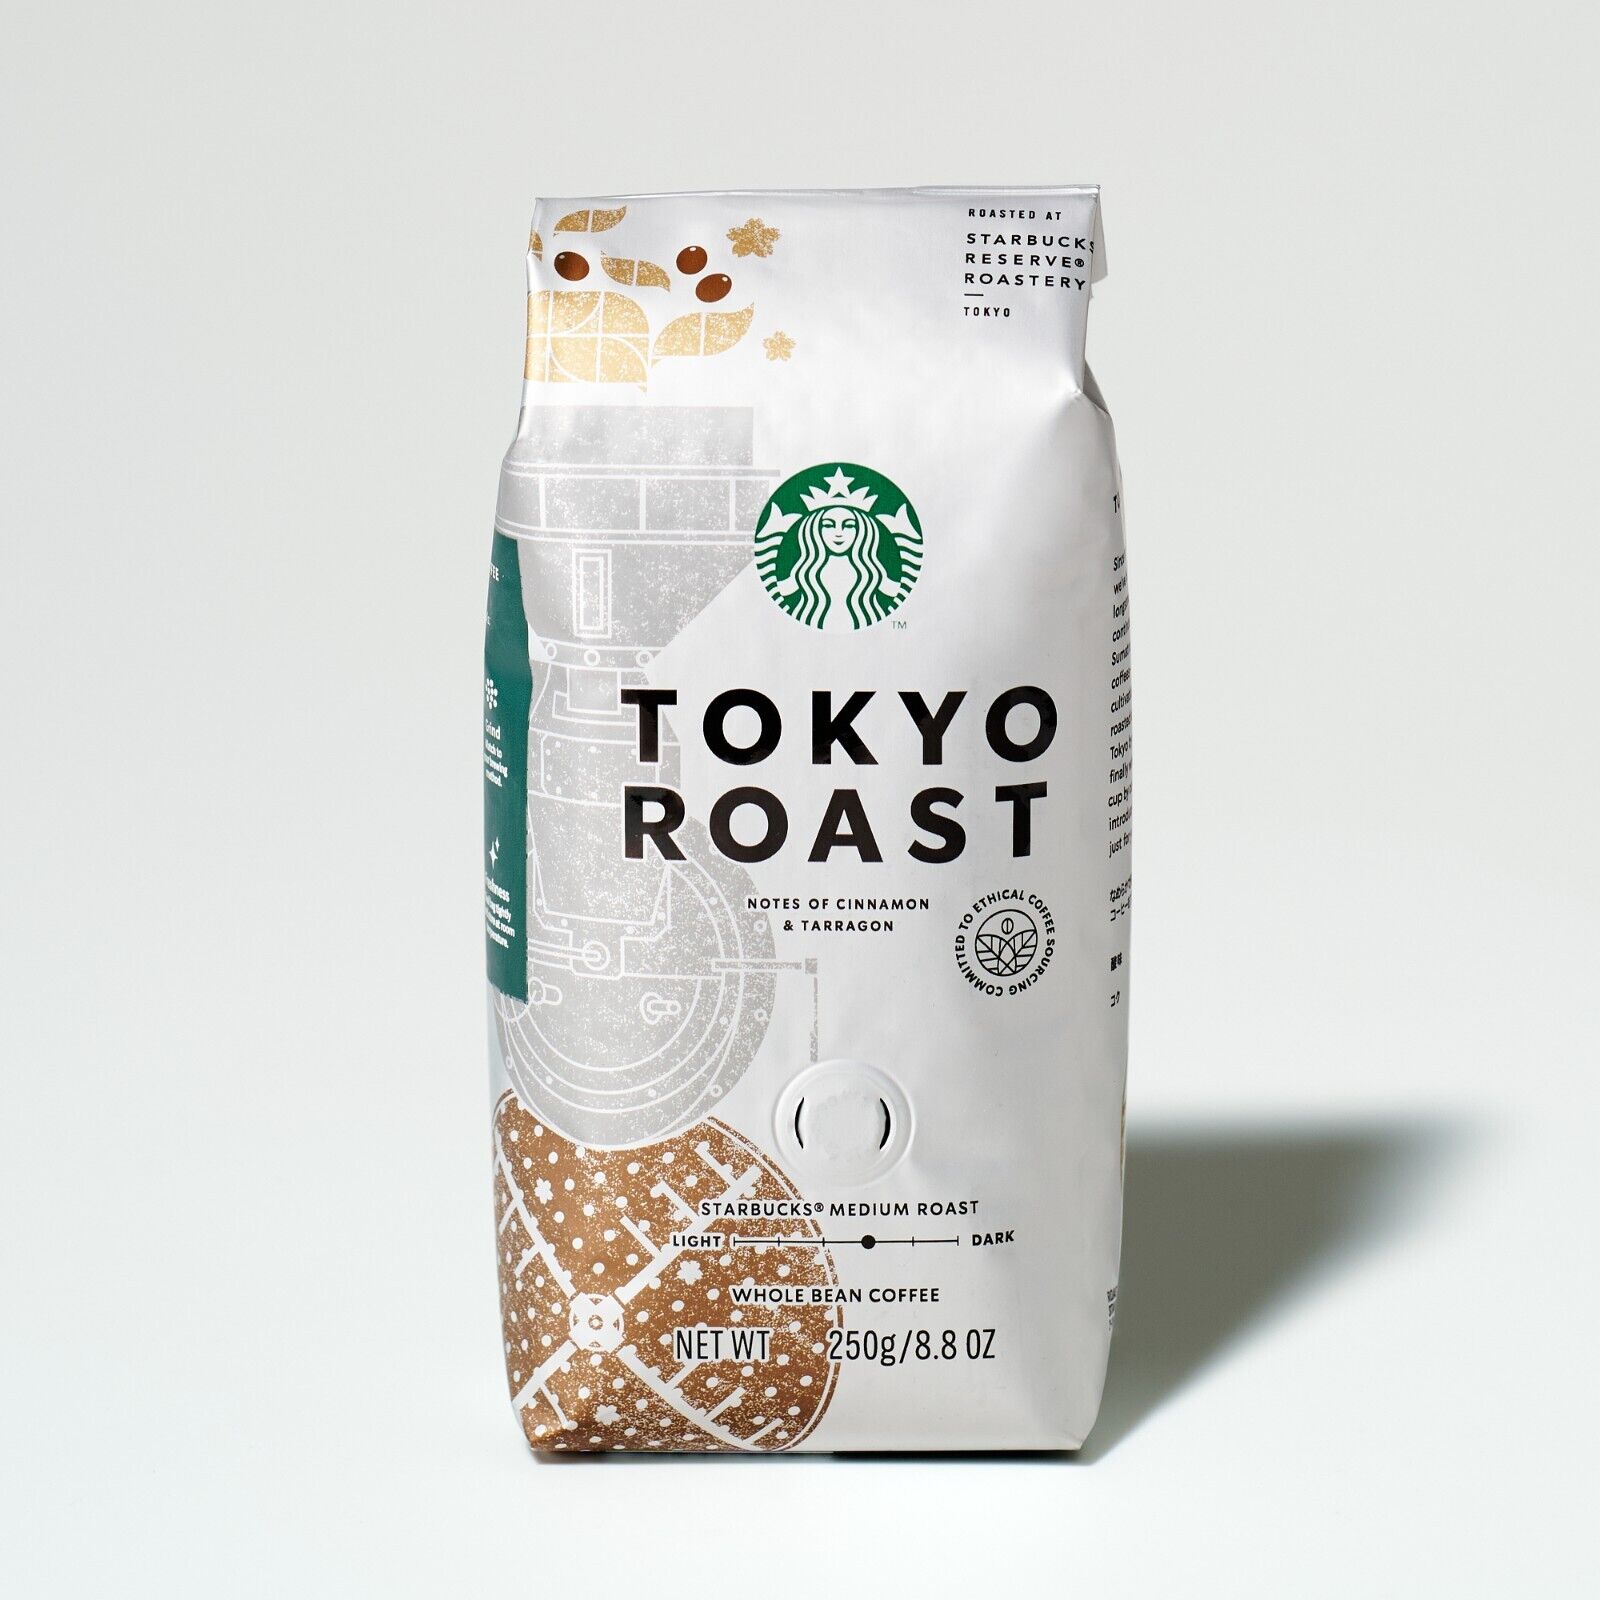 Starbucks Japan TOKYO ROAST  whole bean coffee 250g / 8.8oz Reserve Roastery 